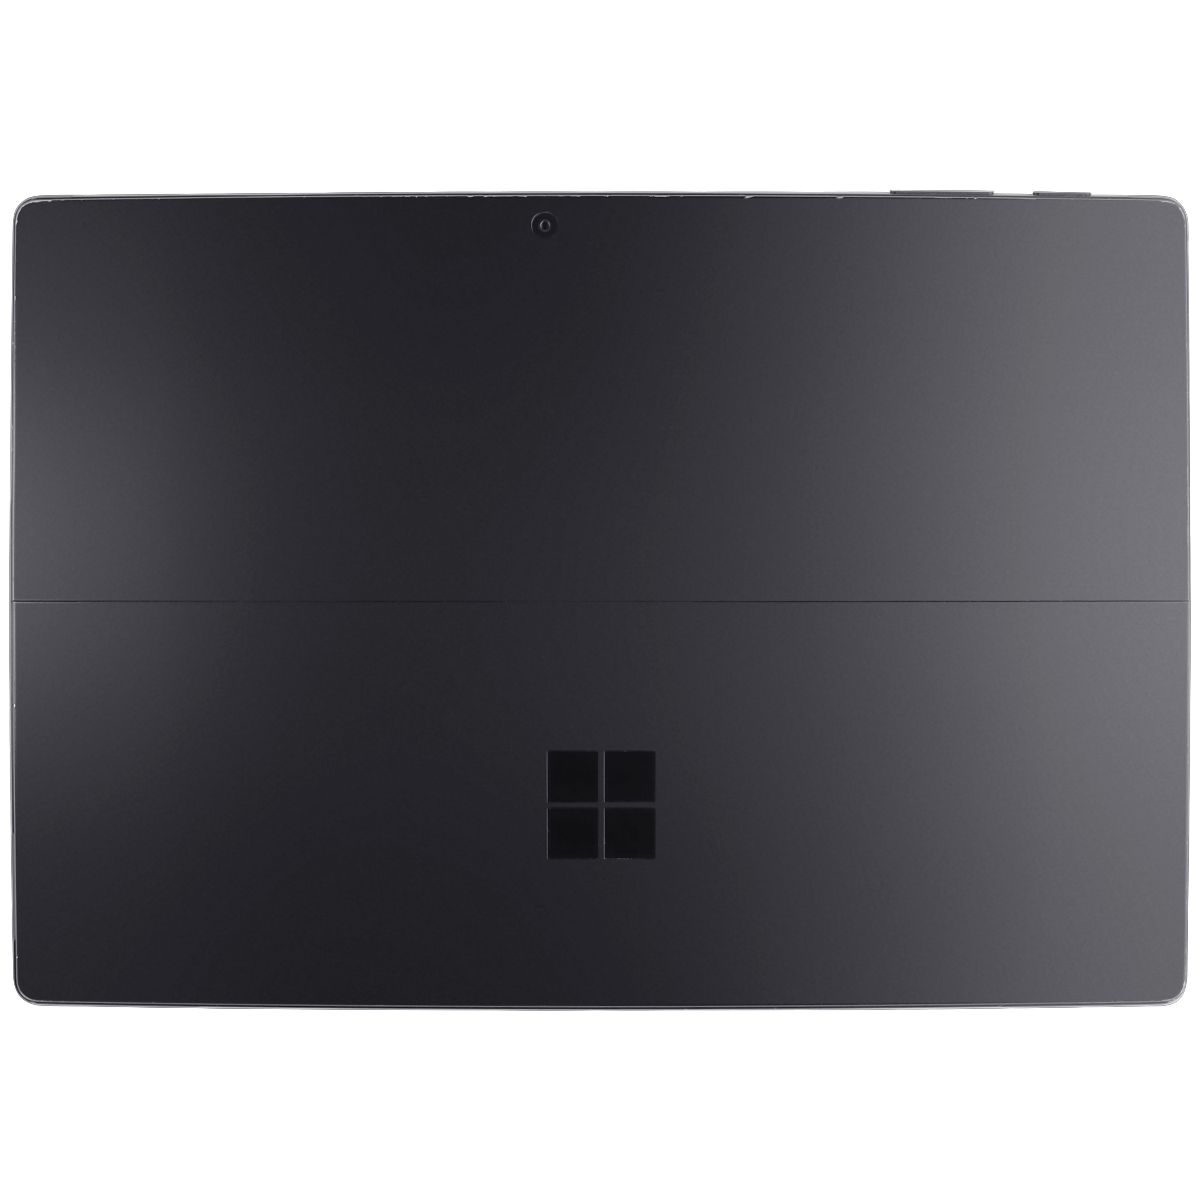 Microsoft Surface Pro 7 (12.3-inch) 1866 (i5-1035G4/256GB/8GB) - Matte Black Laptops - PC Laptops & Netbooks Microsoft    - Simple Cell Bulk Wholesale Pricing - USA Seller